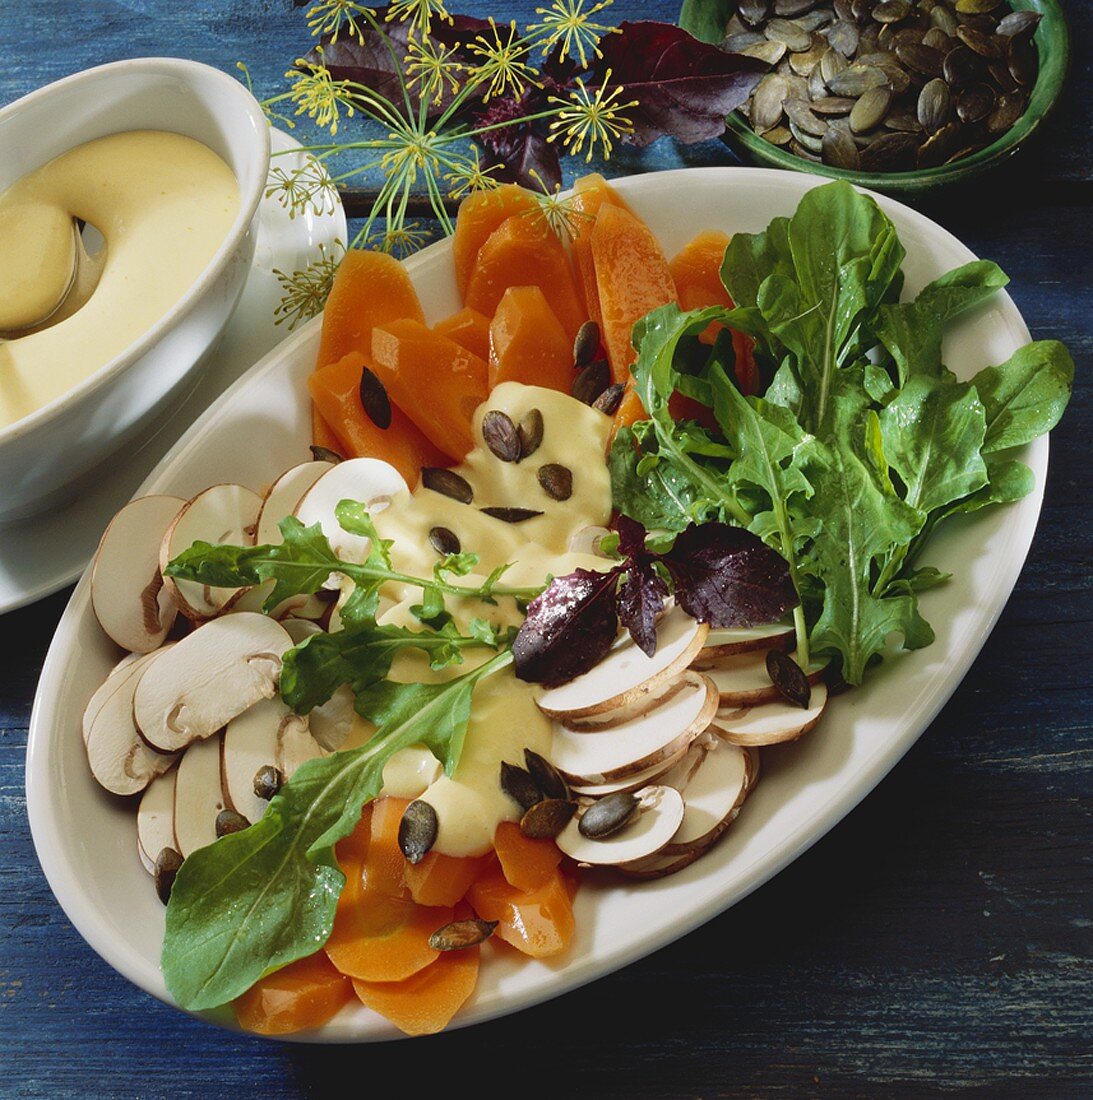 Salad platter with lemon and mustard dressing